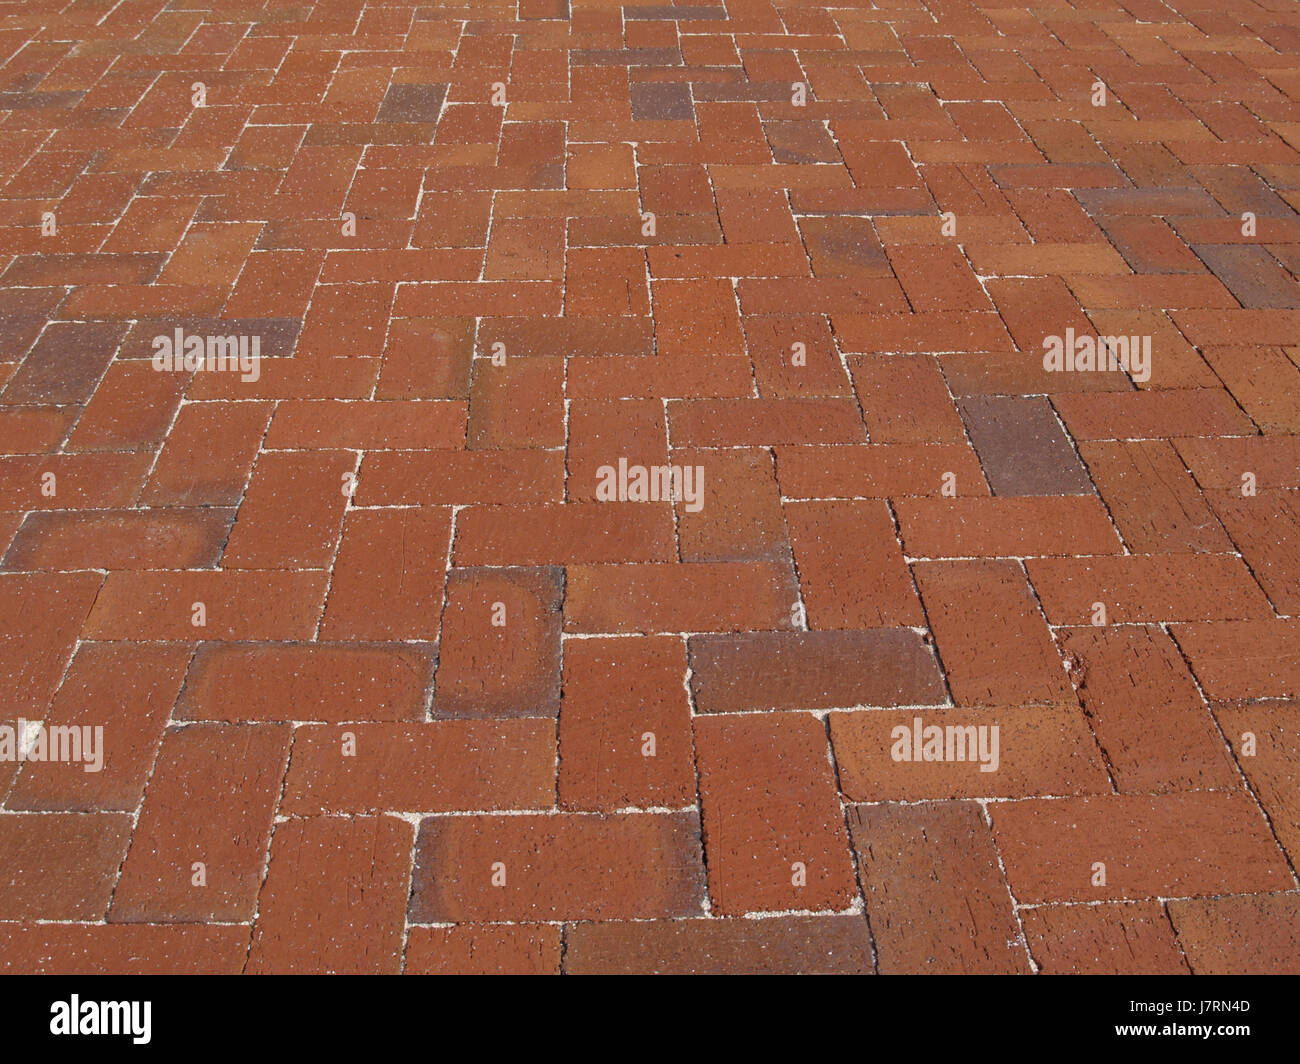 brick sidewalk pattern old red texture walk go going walking architectural Stock Photo